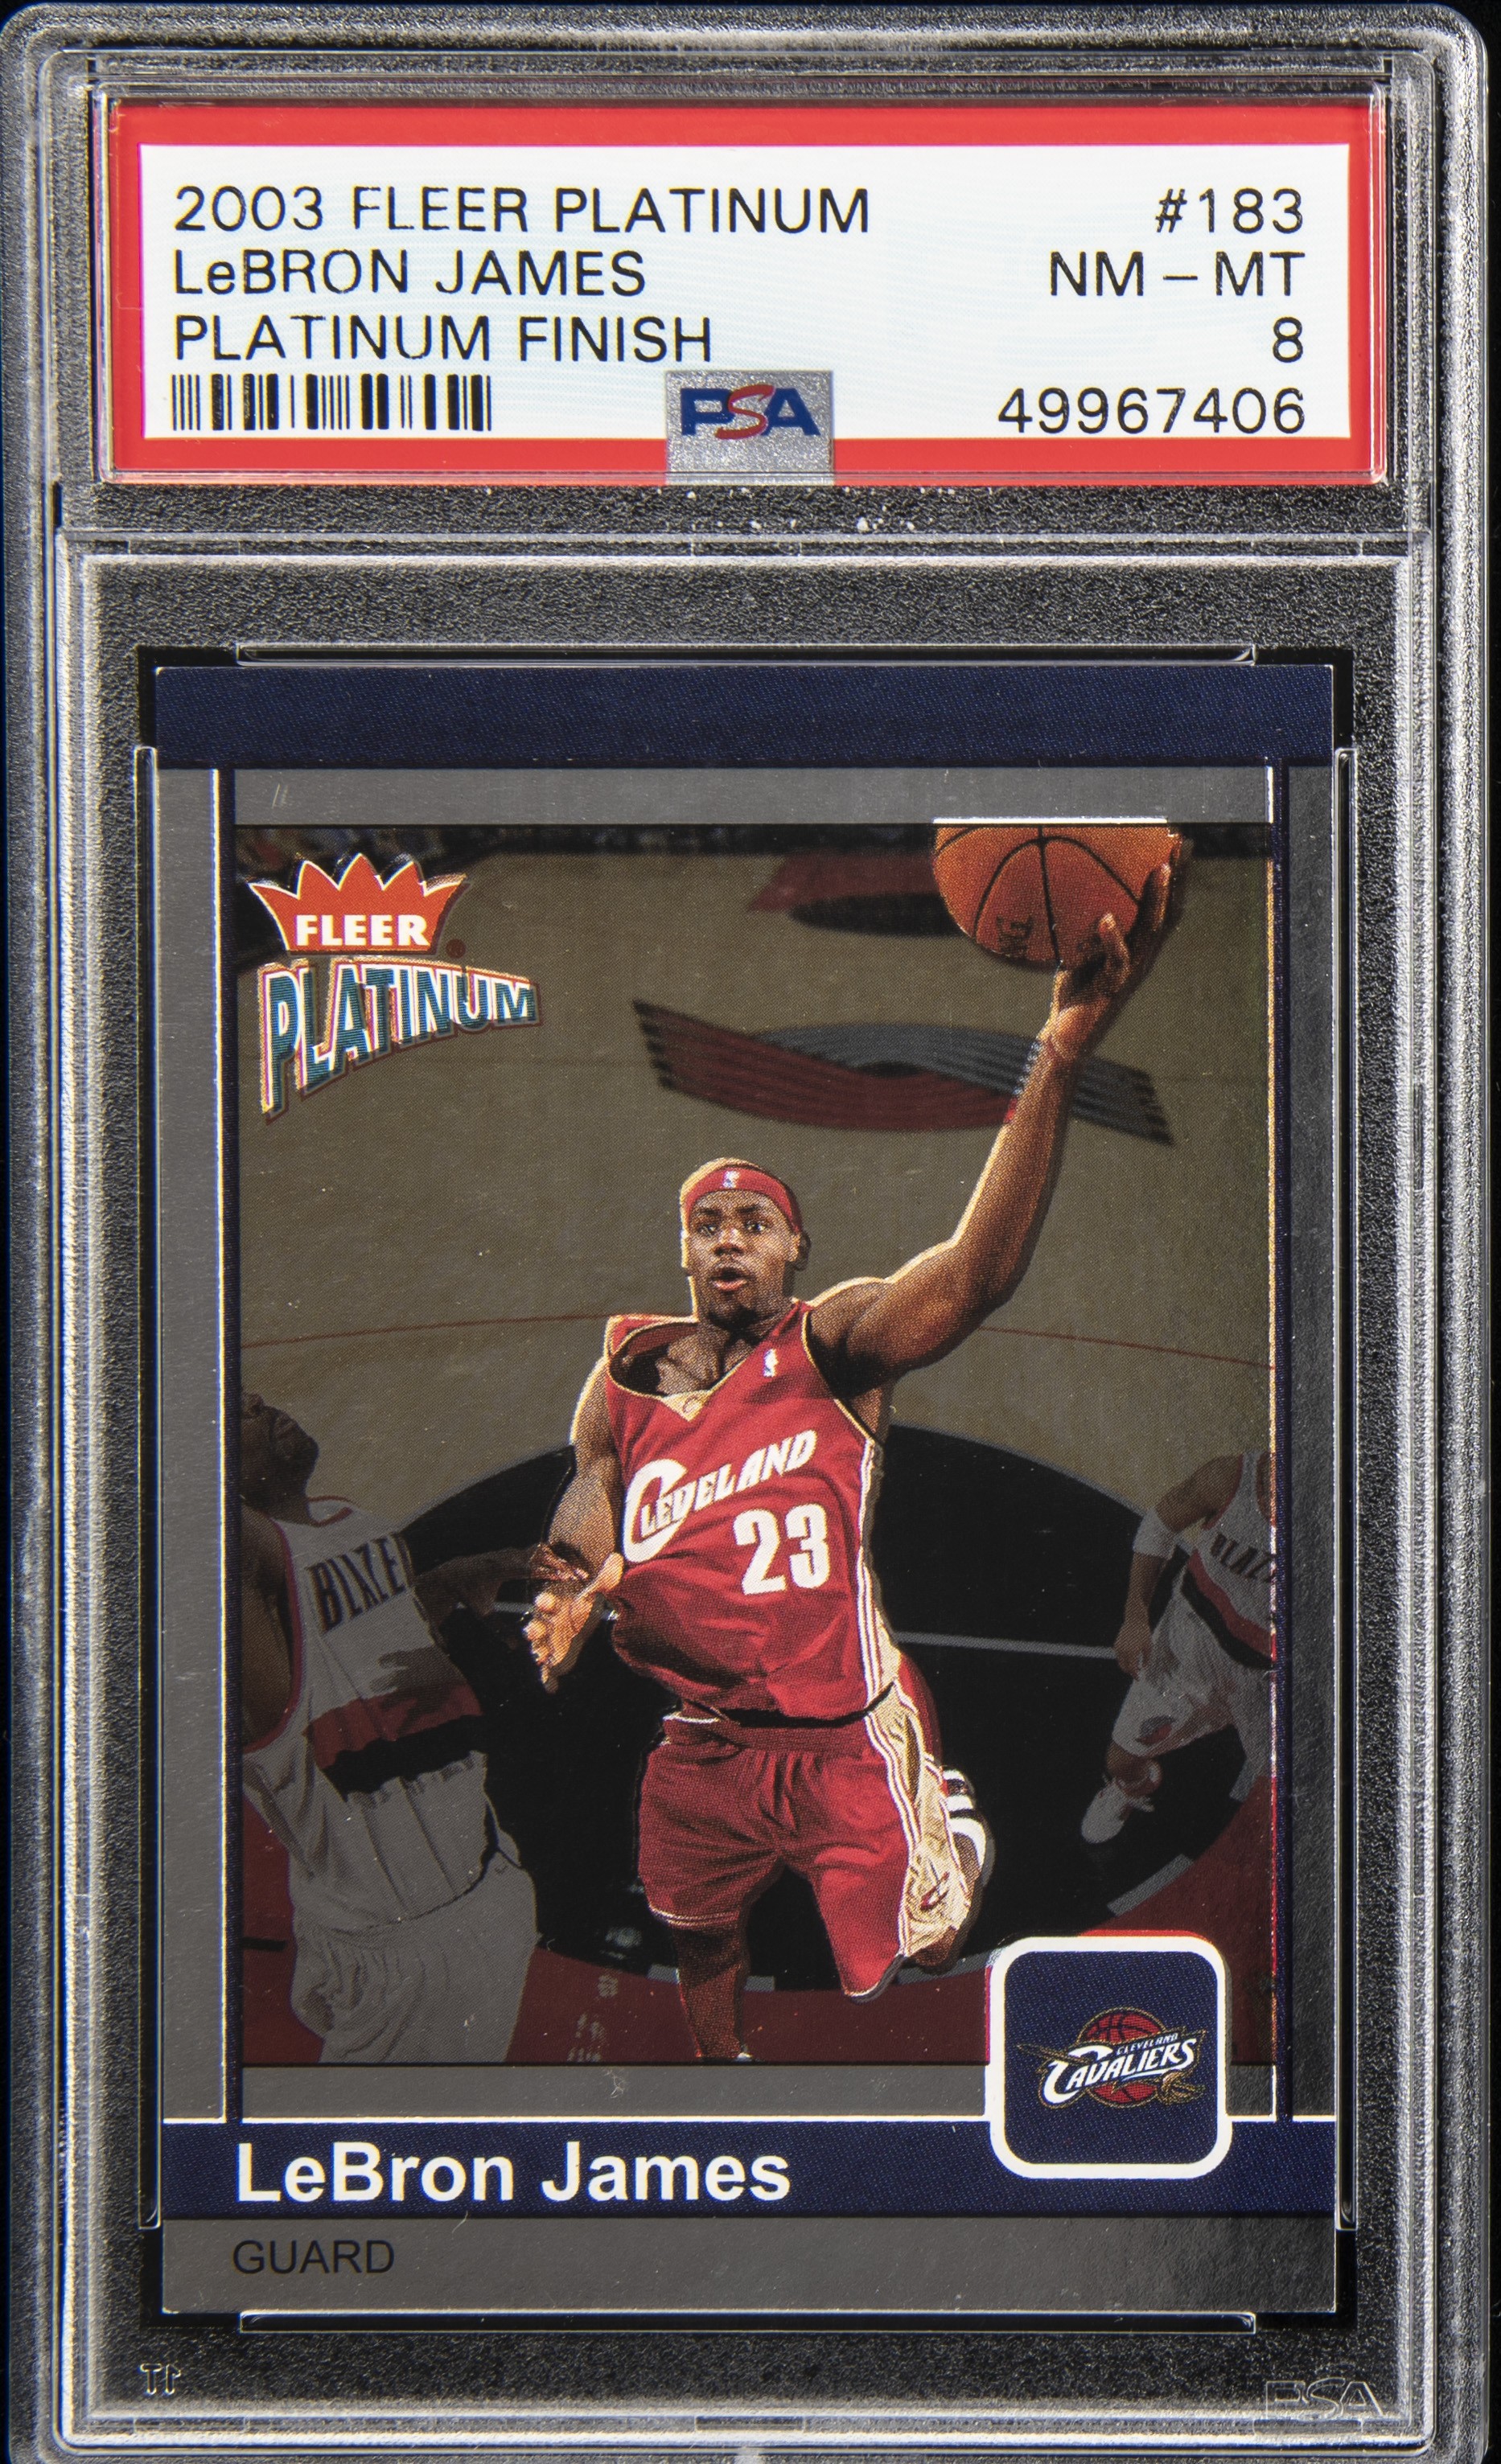 2003 Fleer Platinum Platinum Finish #183 LeBron James Rookie Card (#095/100) – PSA NM-MT 8